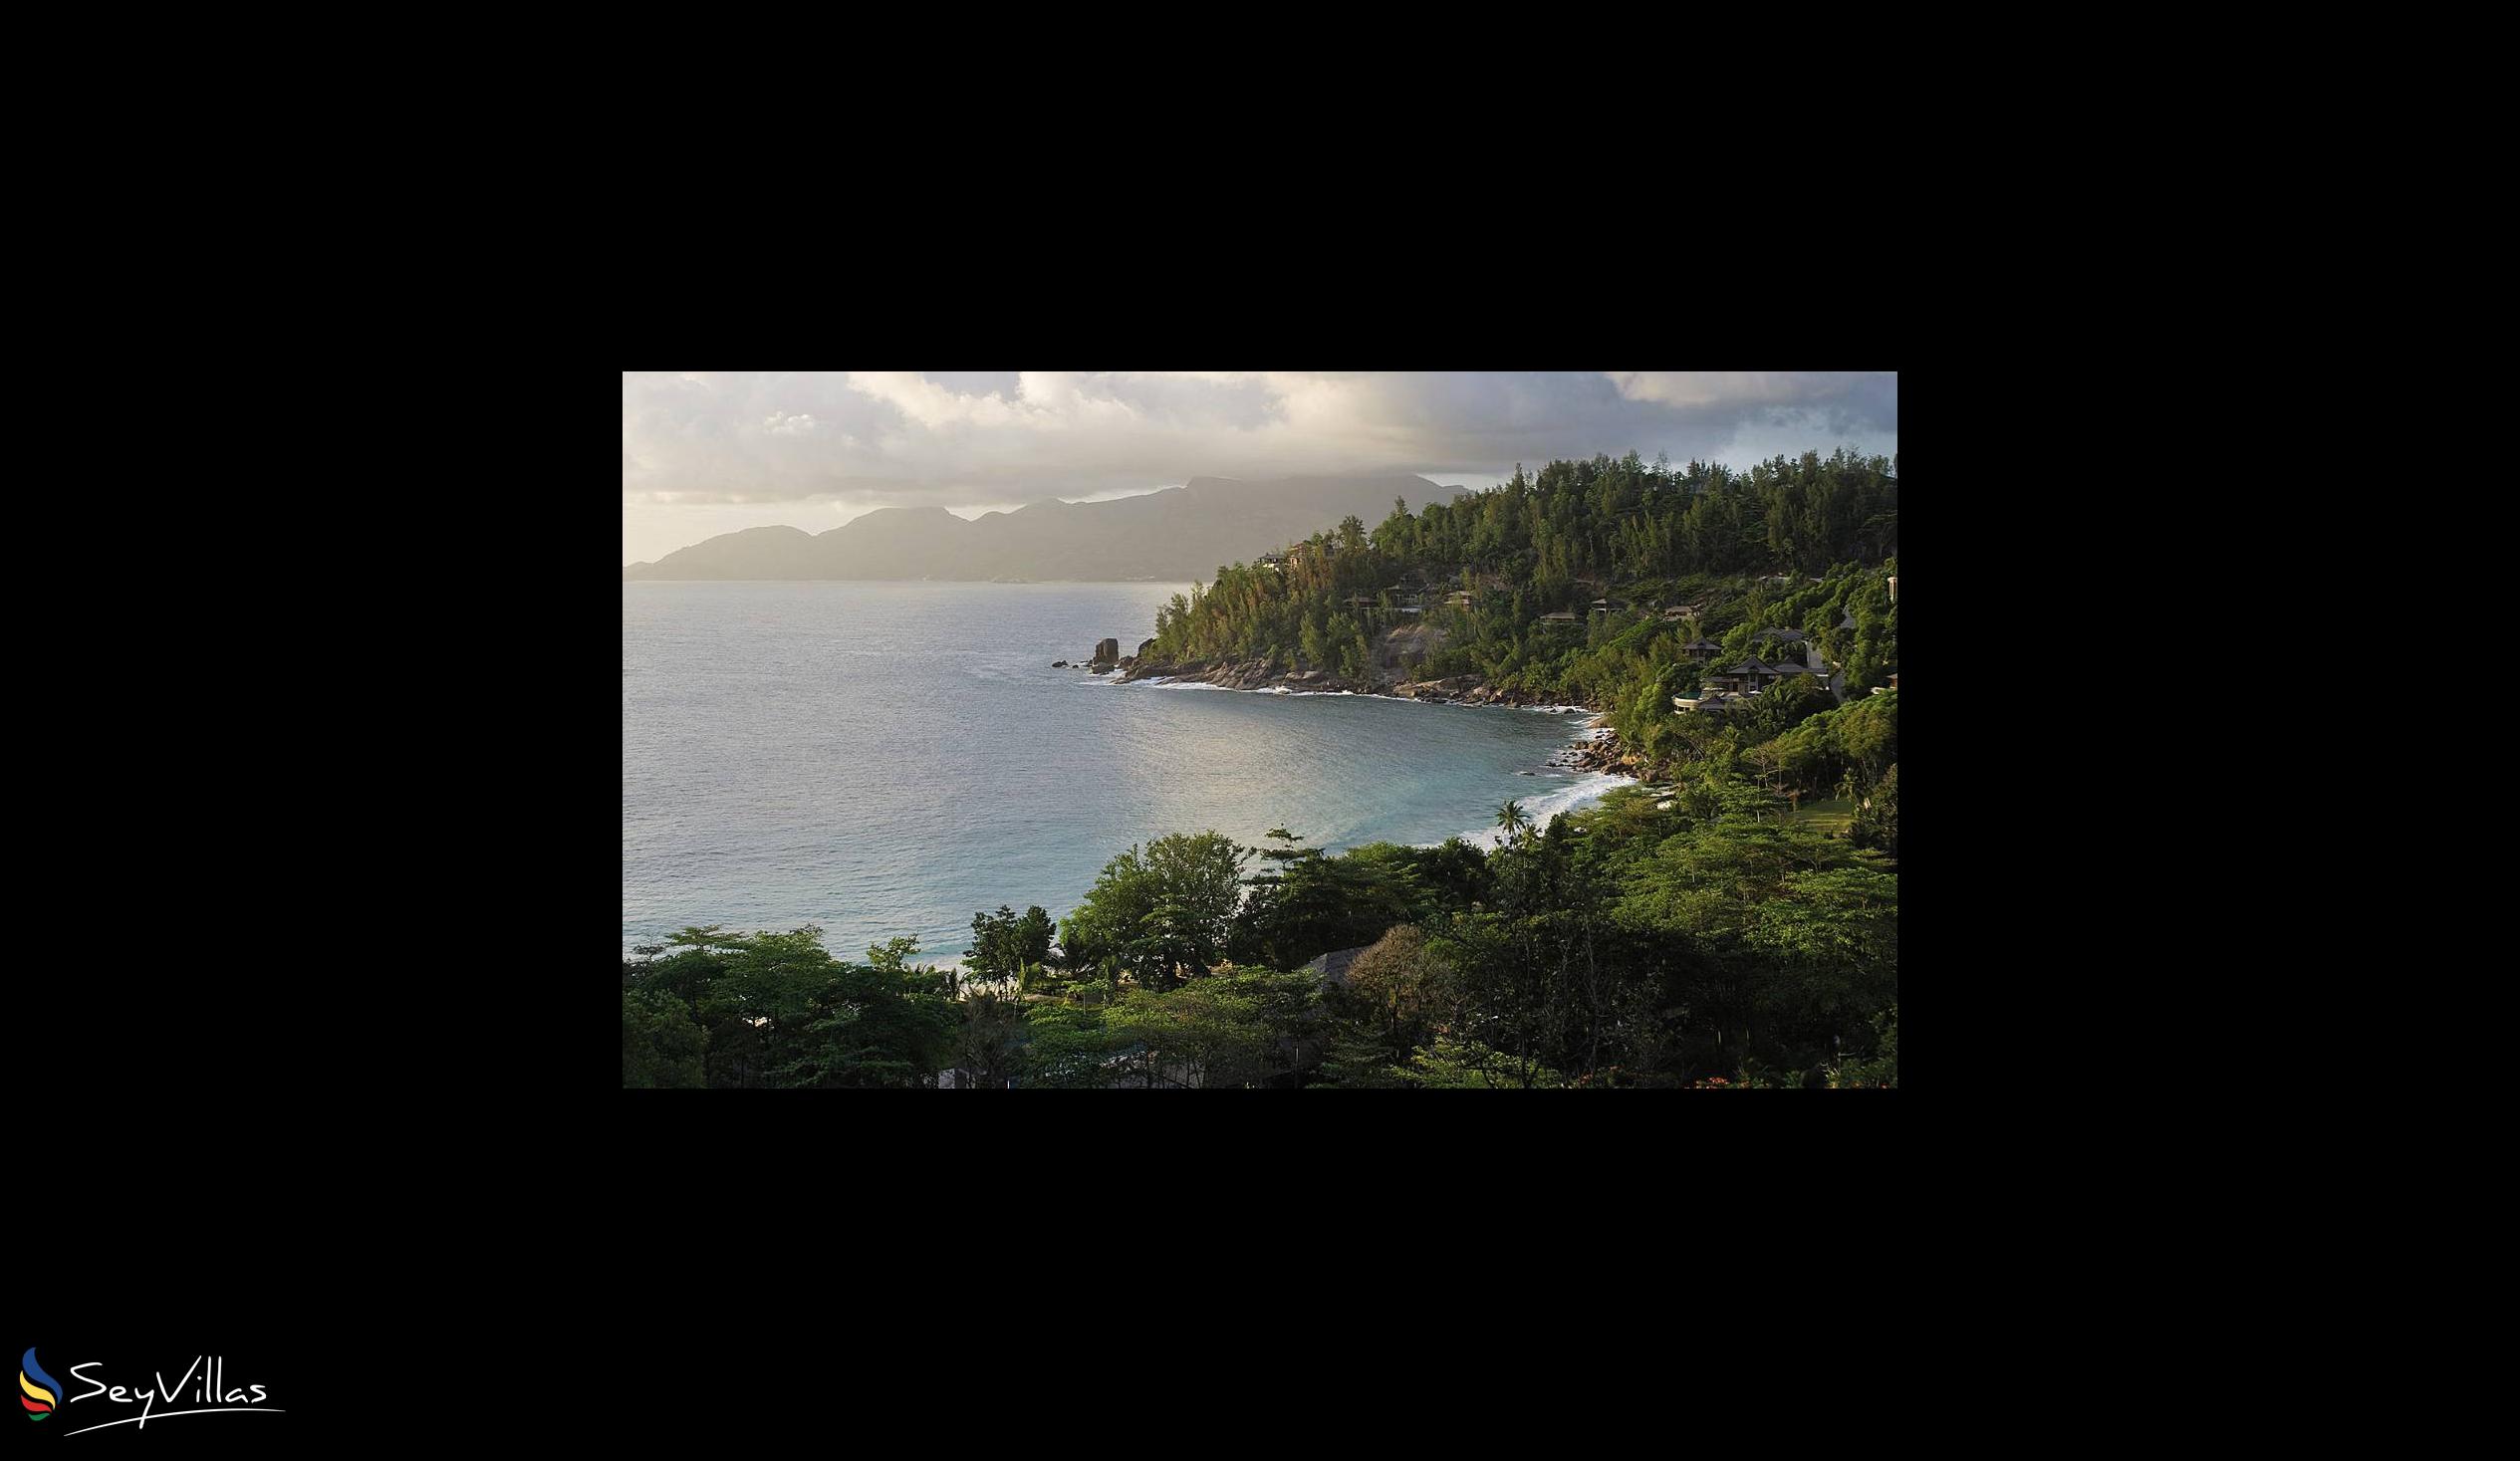 Foto 44: Four Seasons Resort - Location - Mahé (Seychelles)